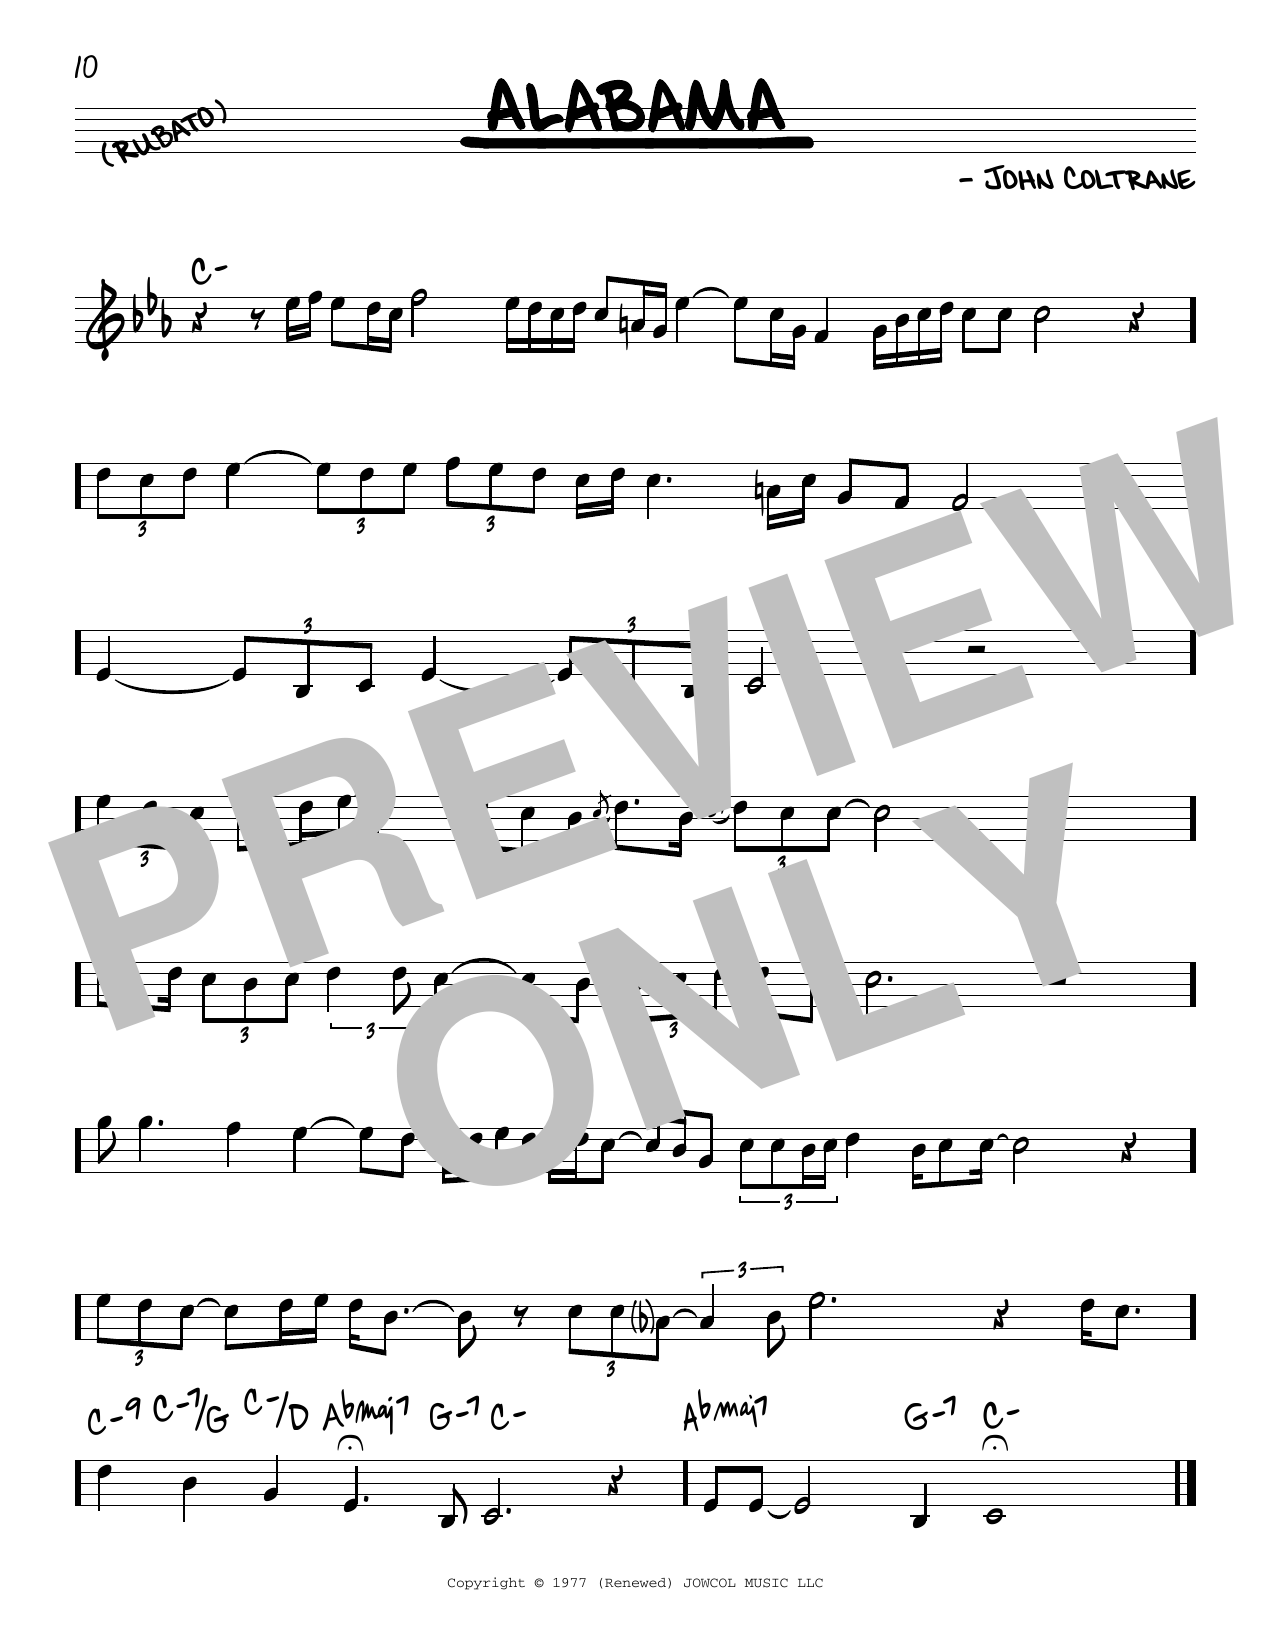 John Coltrane Alabama Sheet Music Notes & Chords for Real Book – Melody & Chords - Download or Print PDF